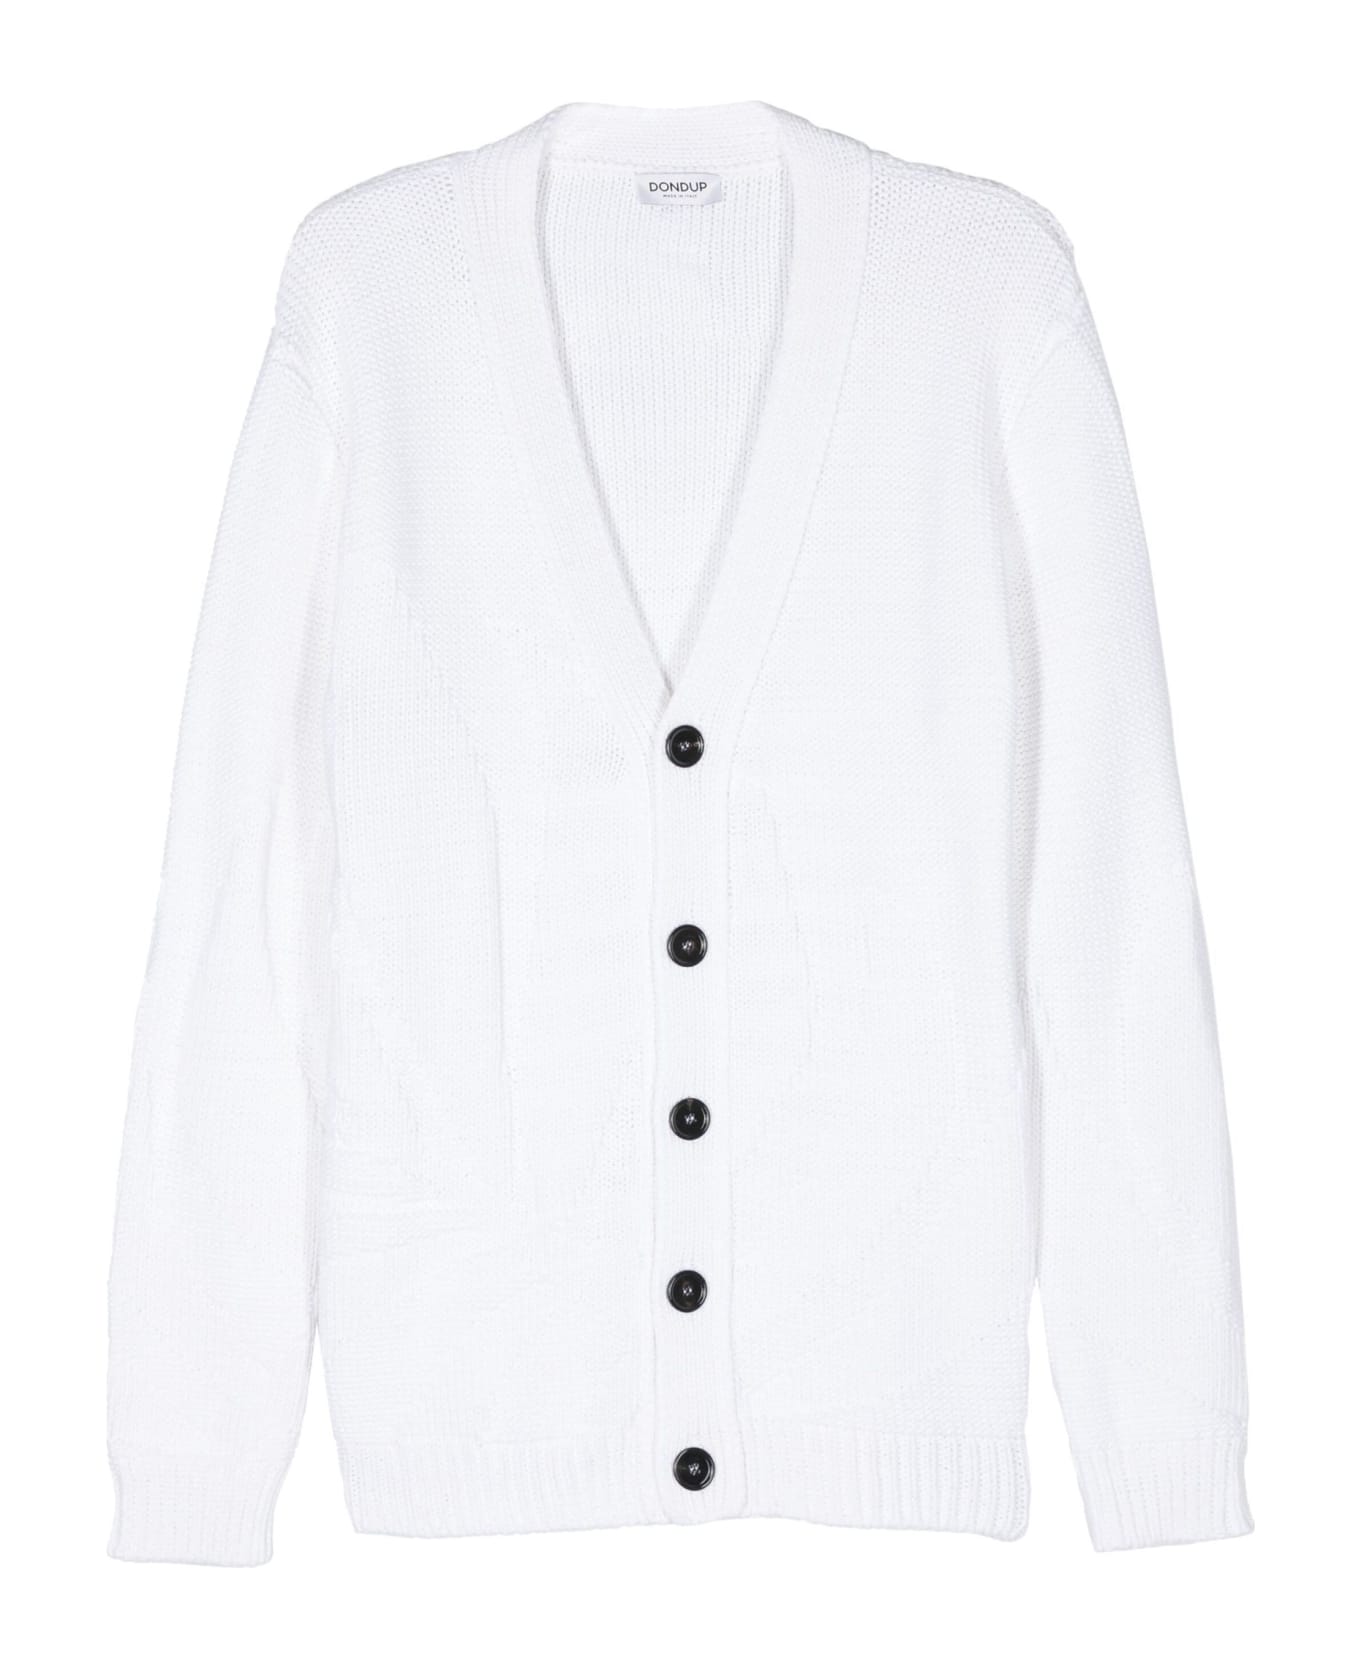 Dondup Sweaters White - White